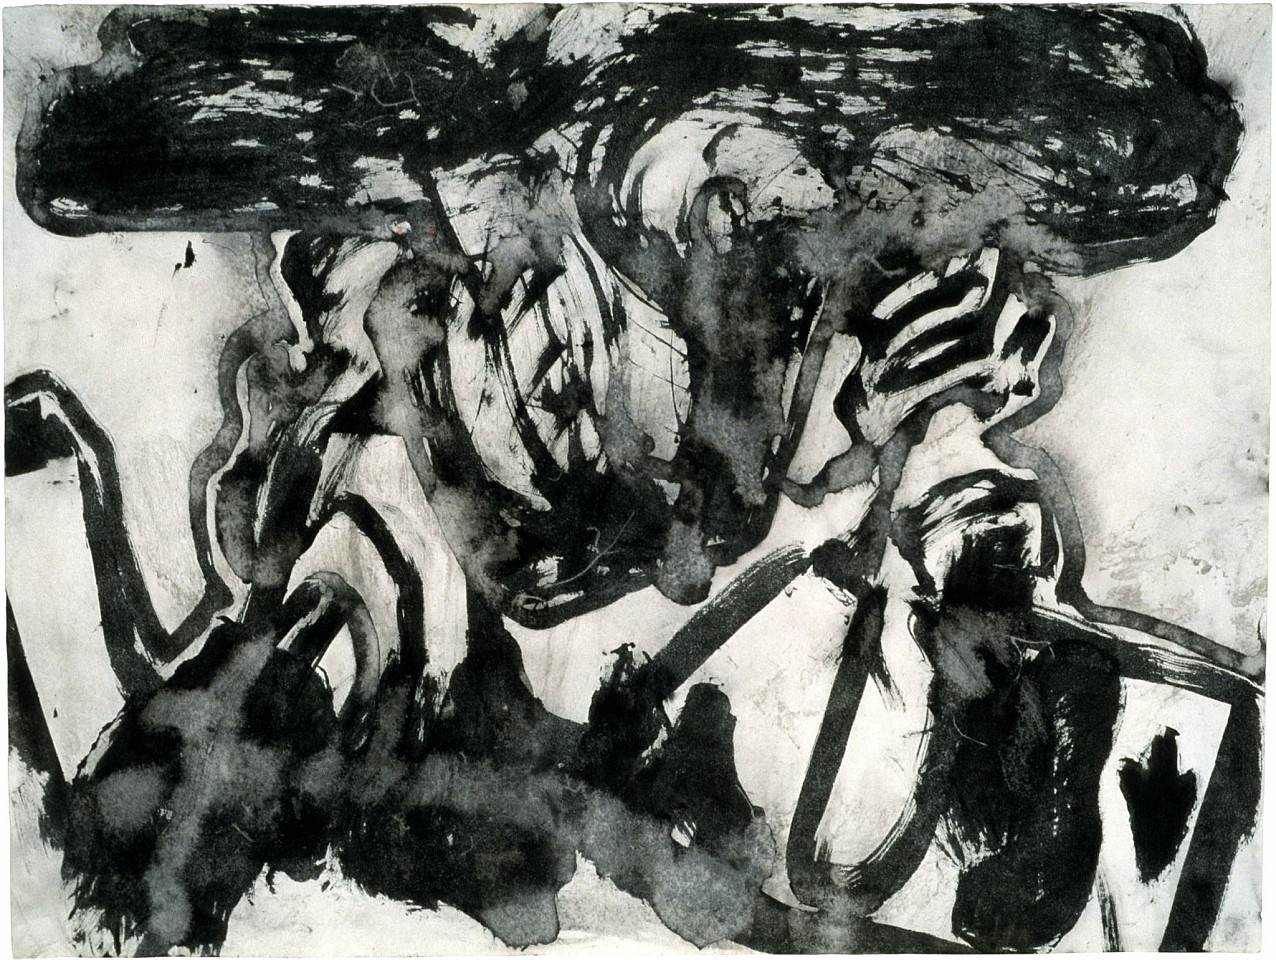 Bo Joseph
Untitled, 1998
JOS259
ink on paper, 20 x 26 1/8 inch paper